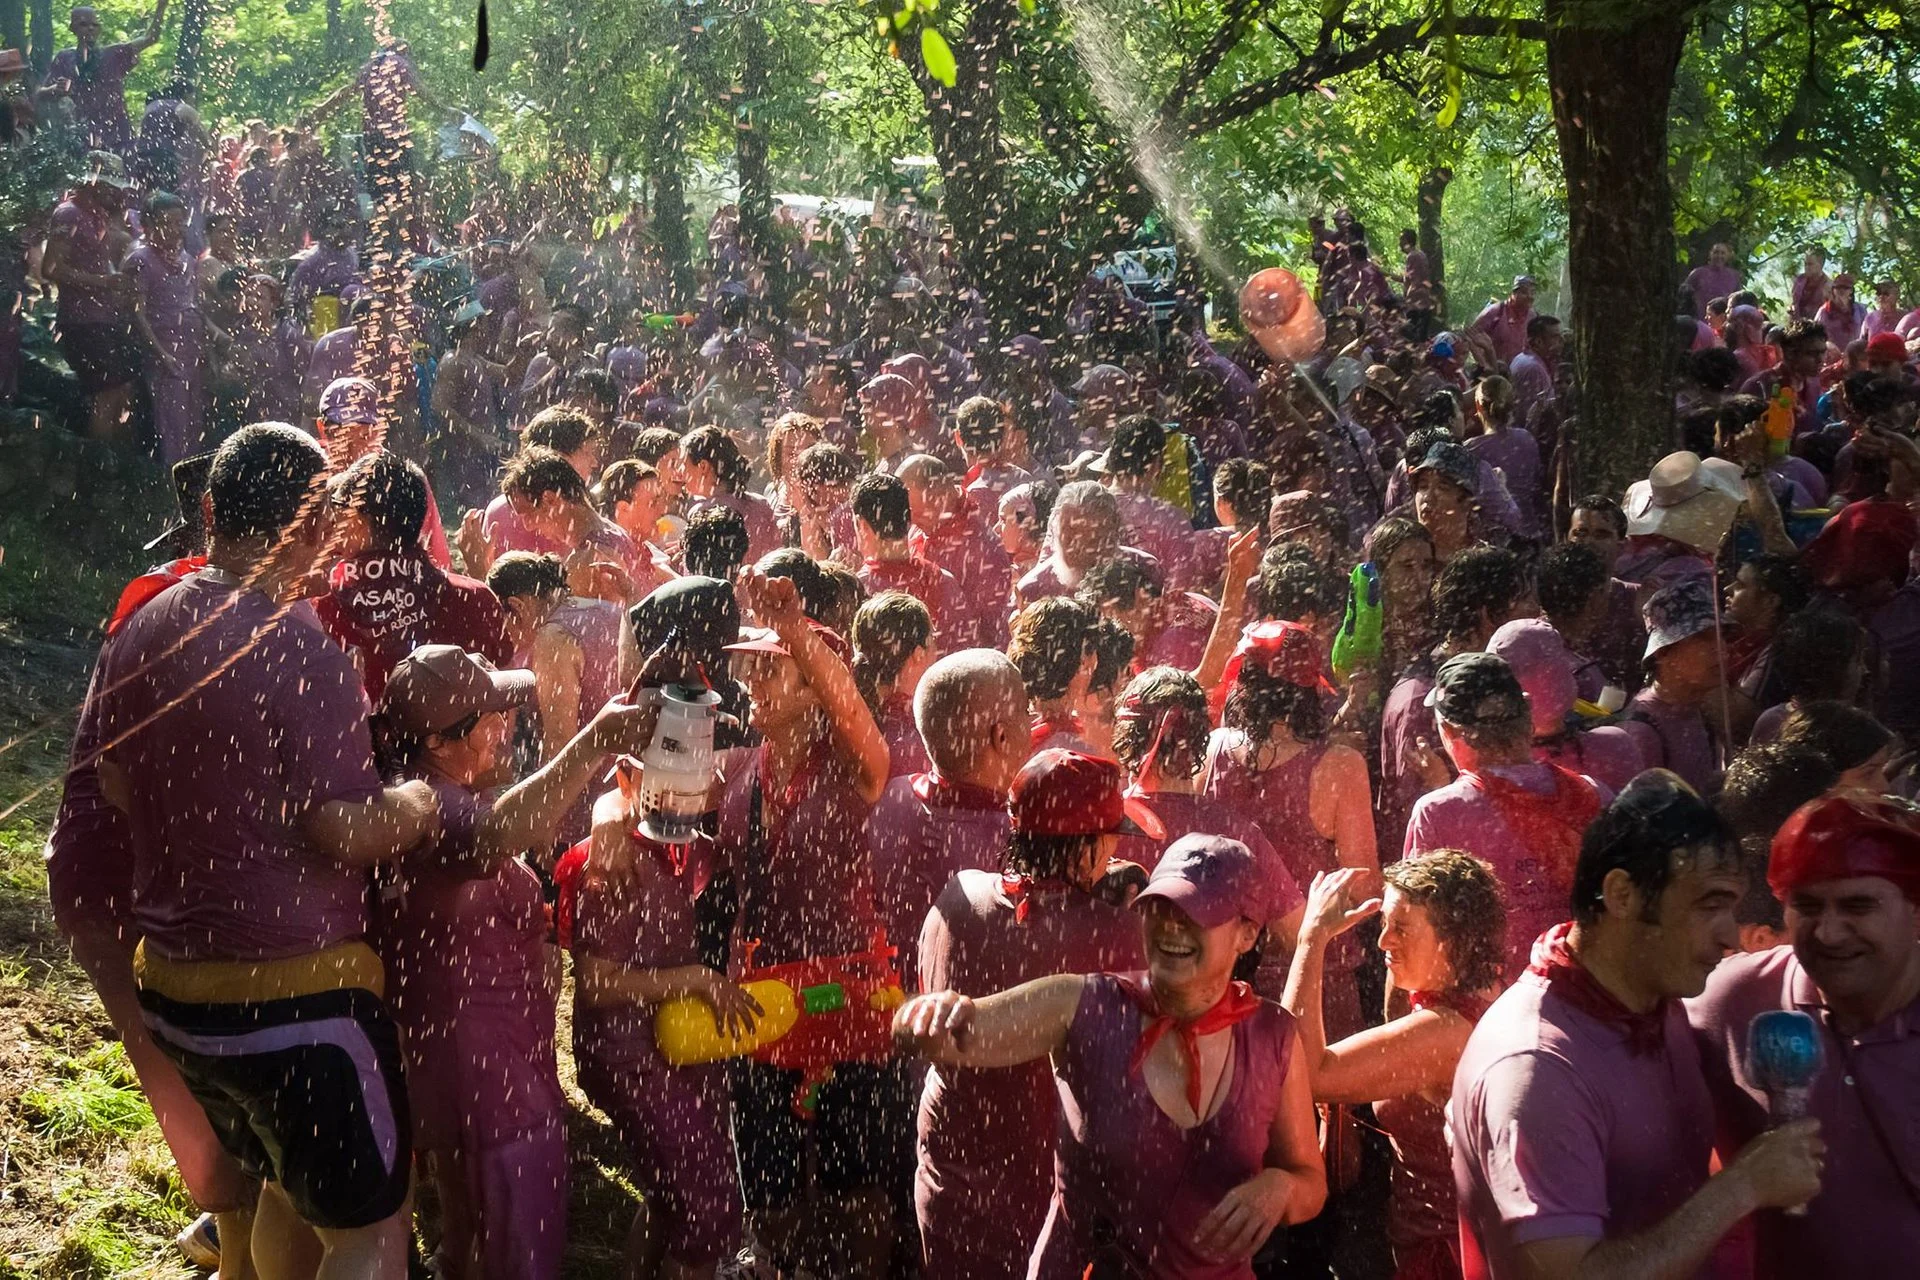 La Battalla del Vino celebration in Spain: Joyful participants drenched in wine during the lively June festival.